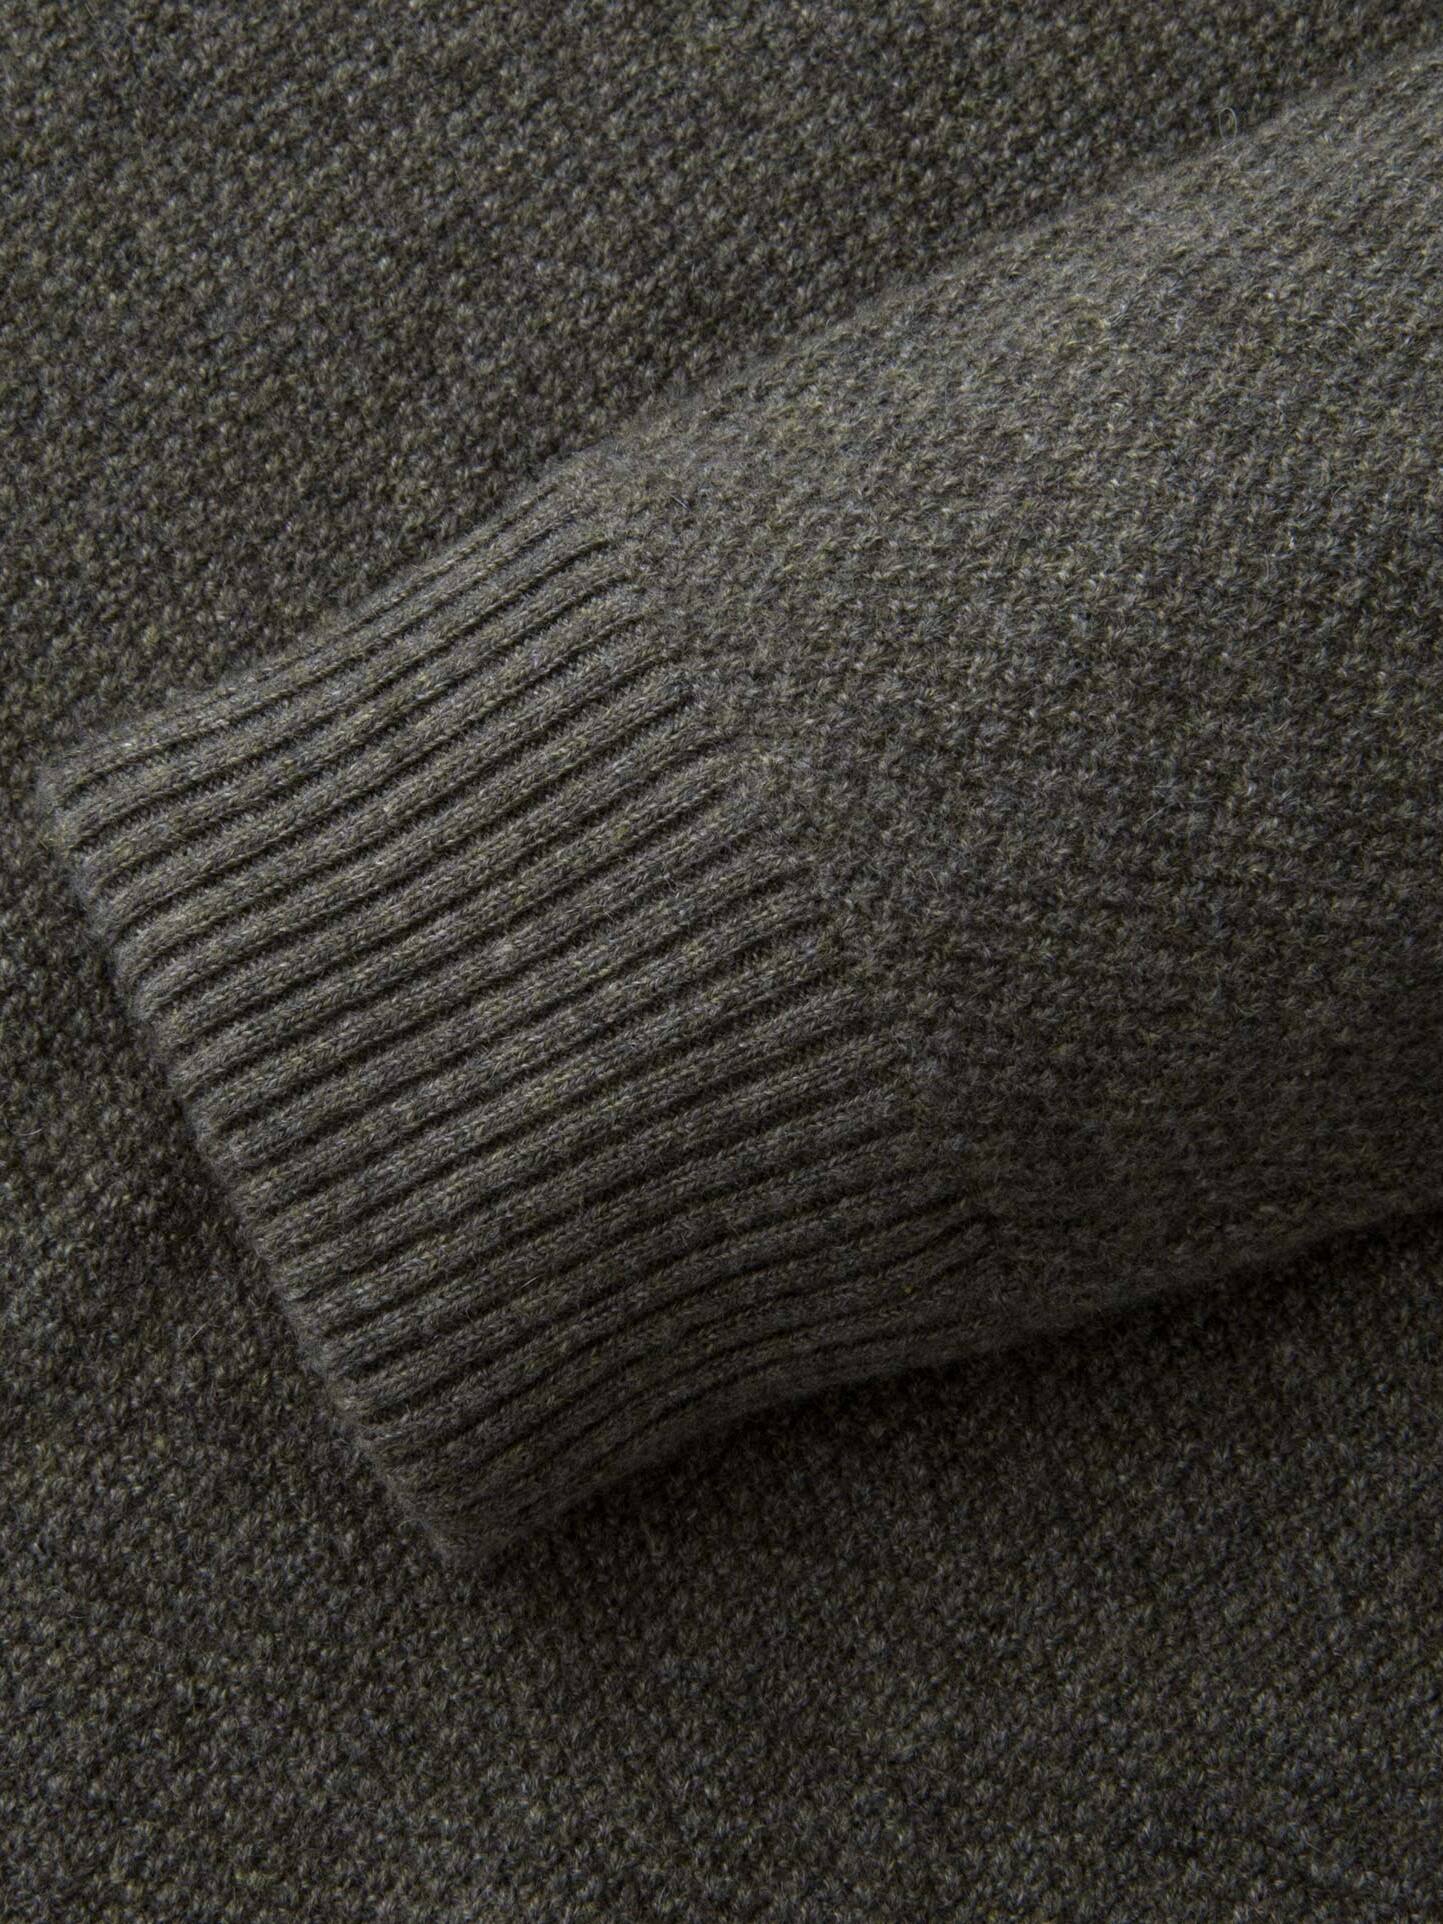 Pine Cobble Stitch Cashmere V-Neck Sweater by Proper Cloth